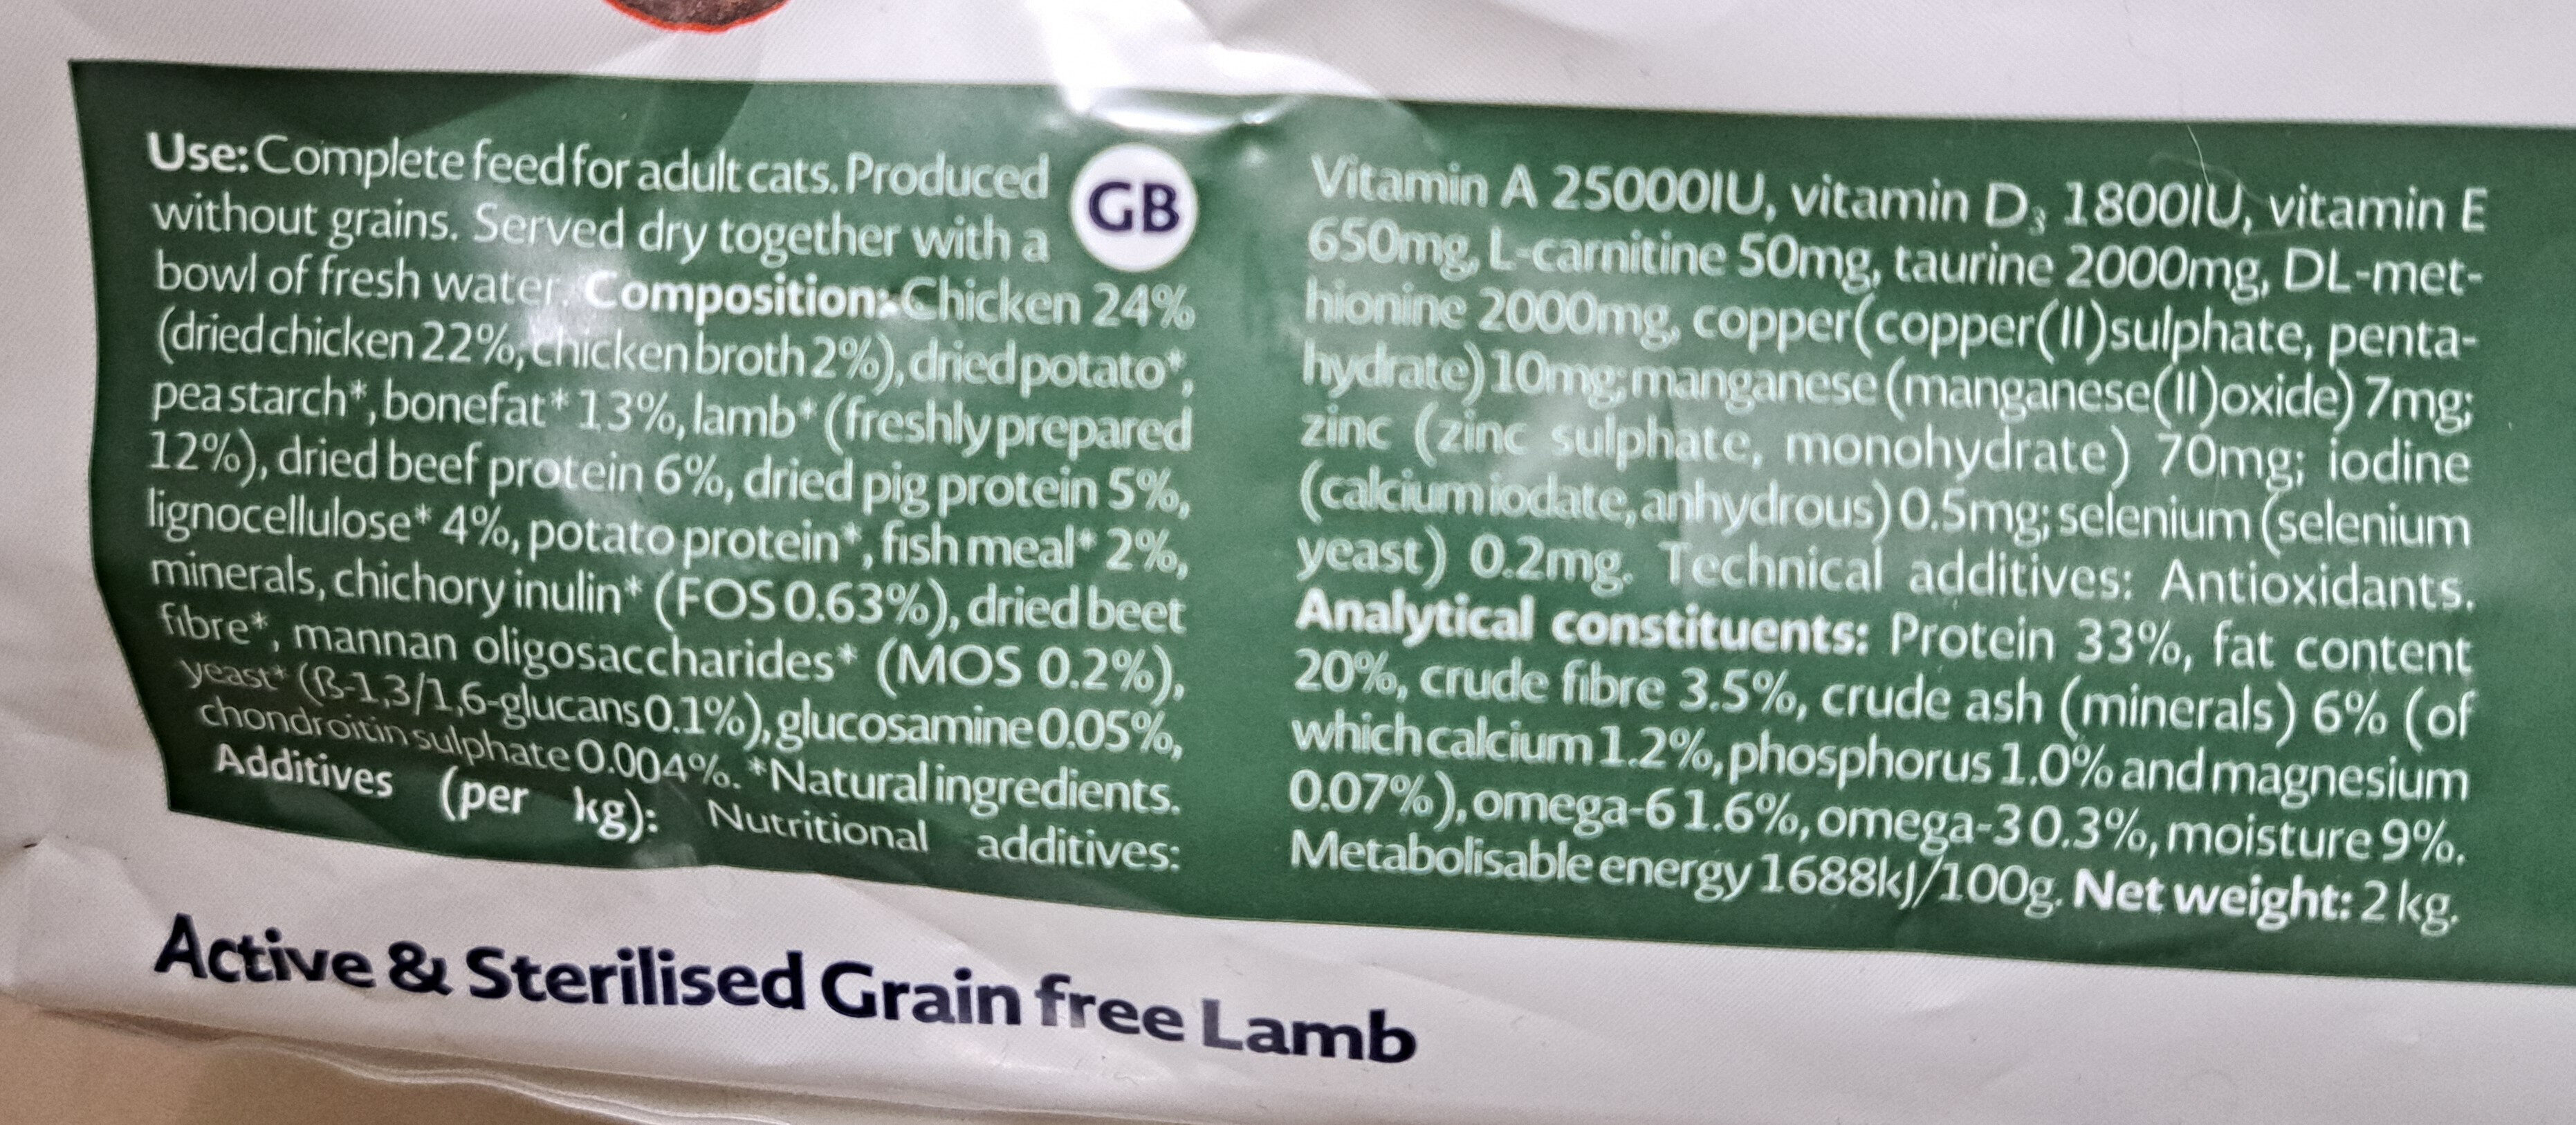 Bozita Active & Sterilized Grain free Lamb - Ingredients - en